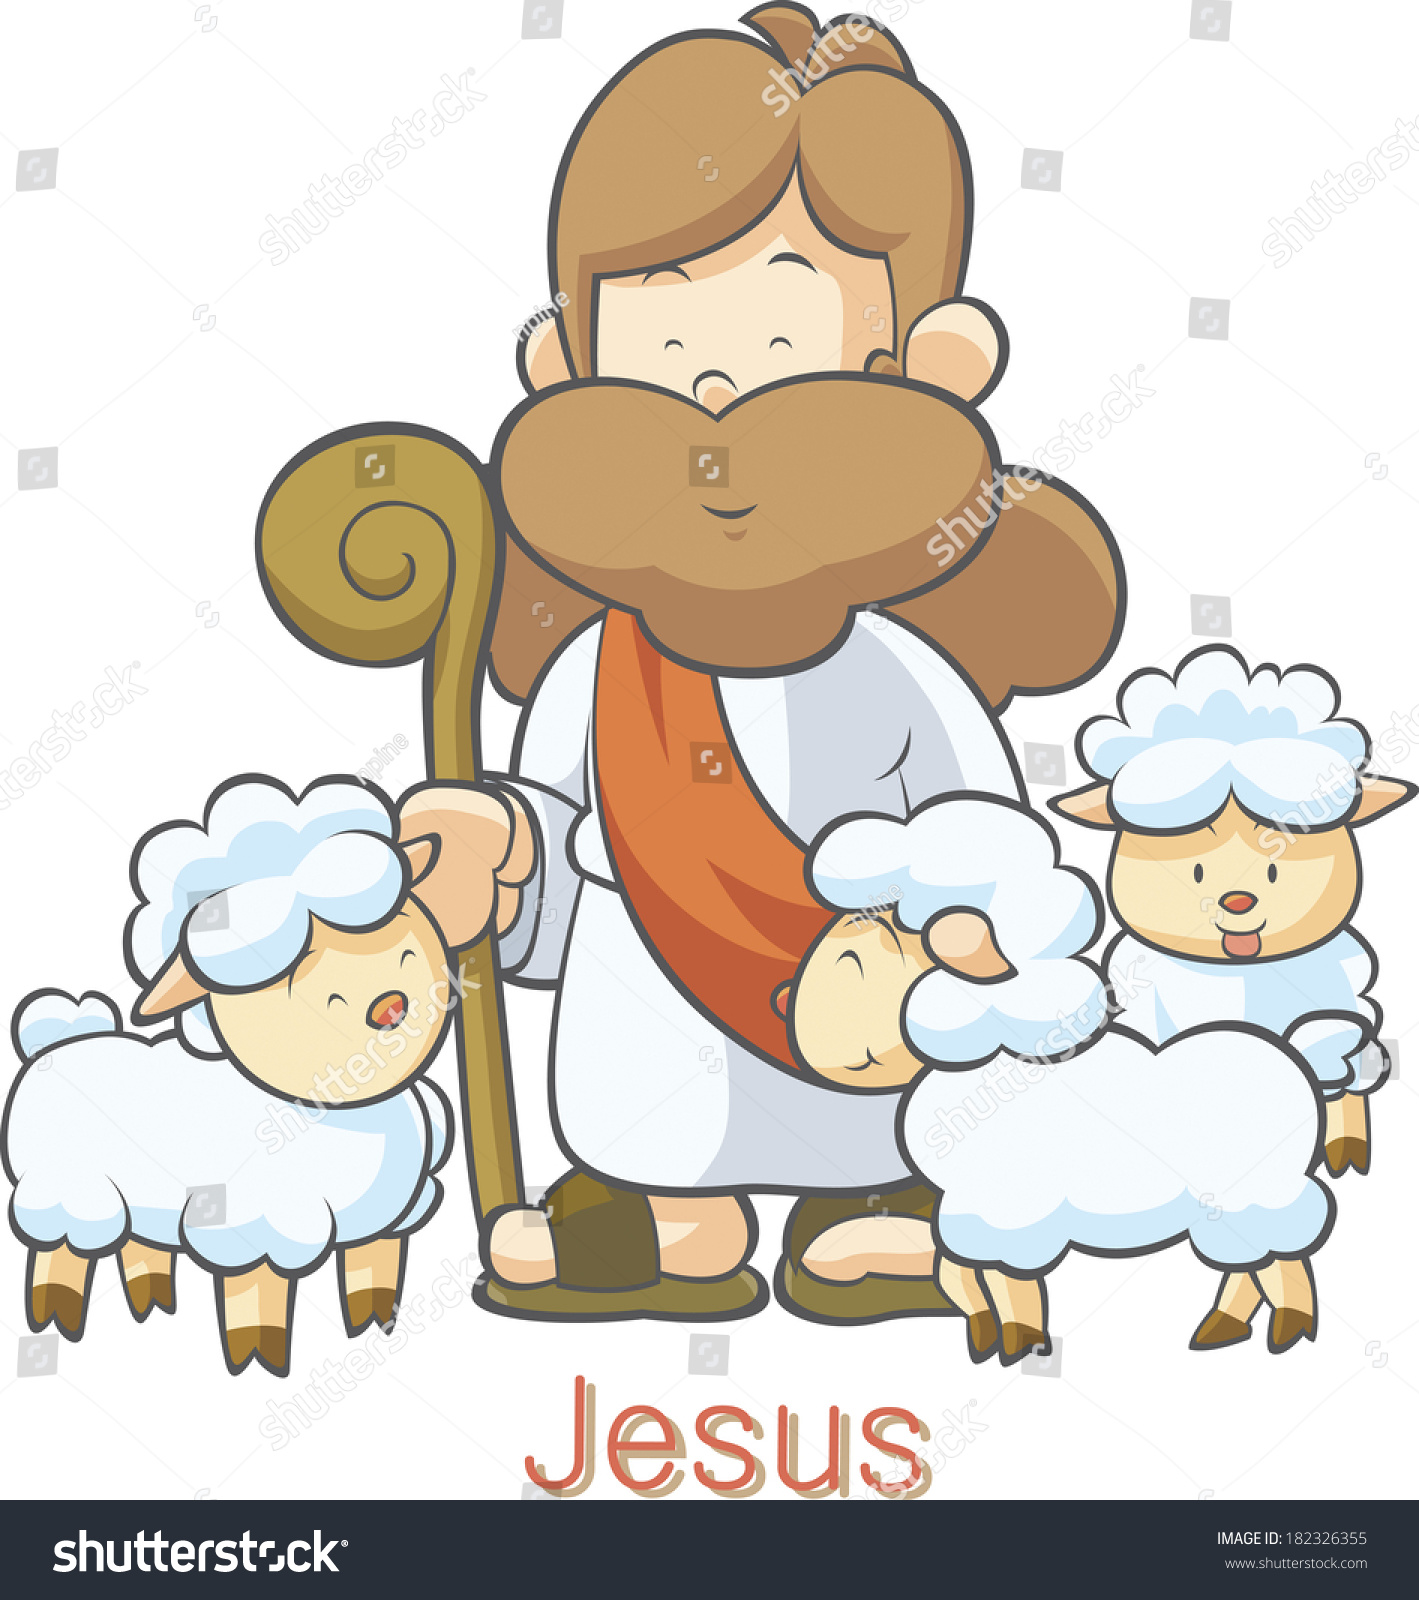 clipart jesus and lamb - photo #45